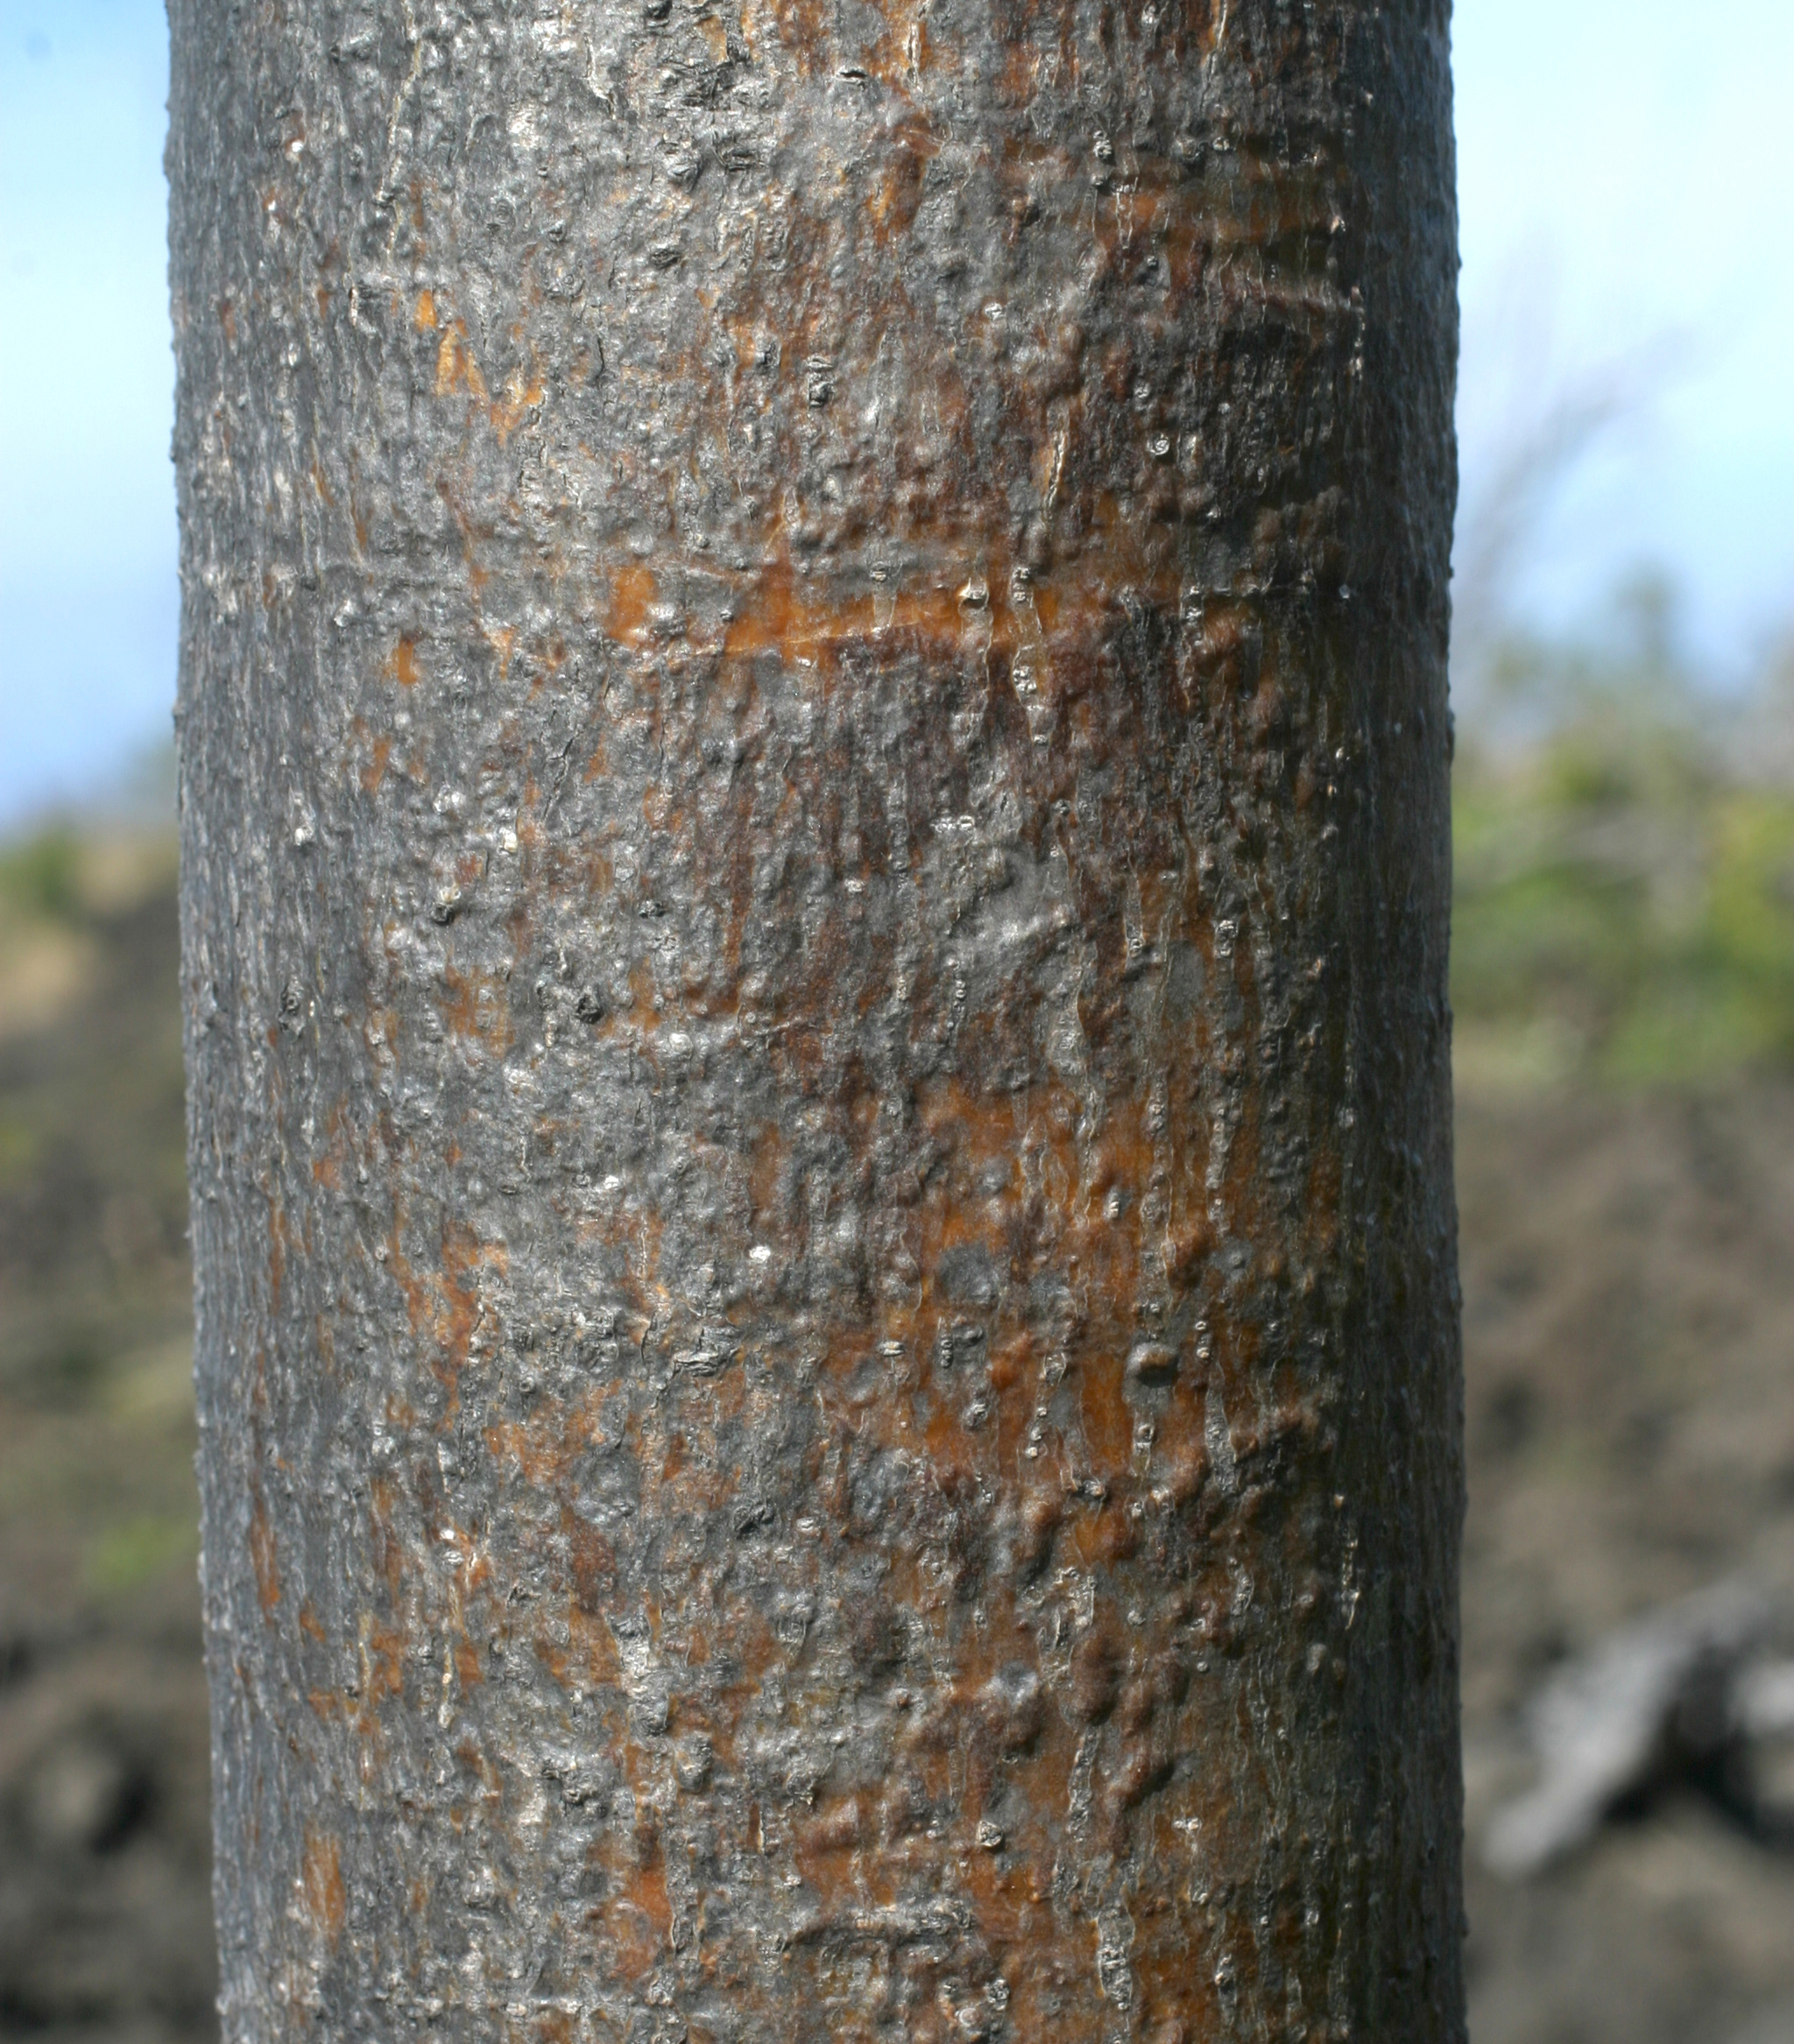 Native Reynoldsia trunk